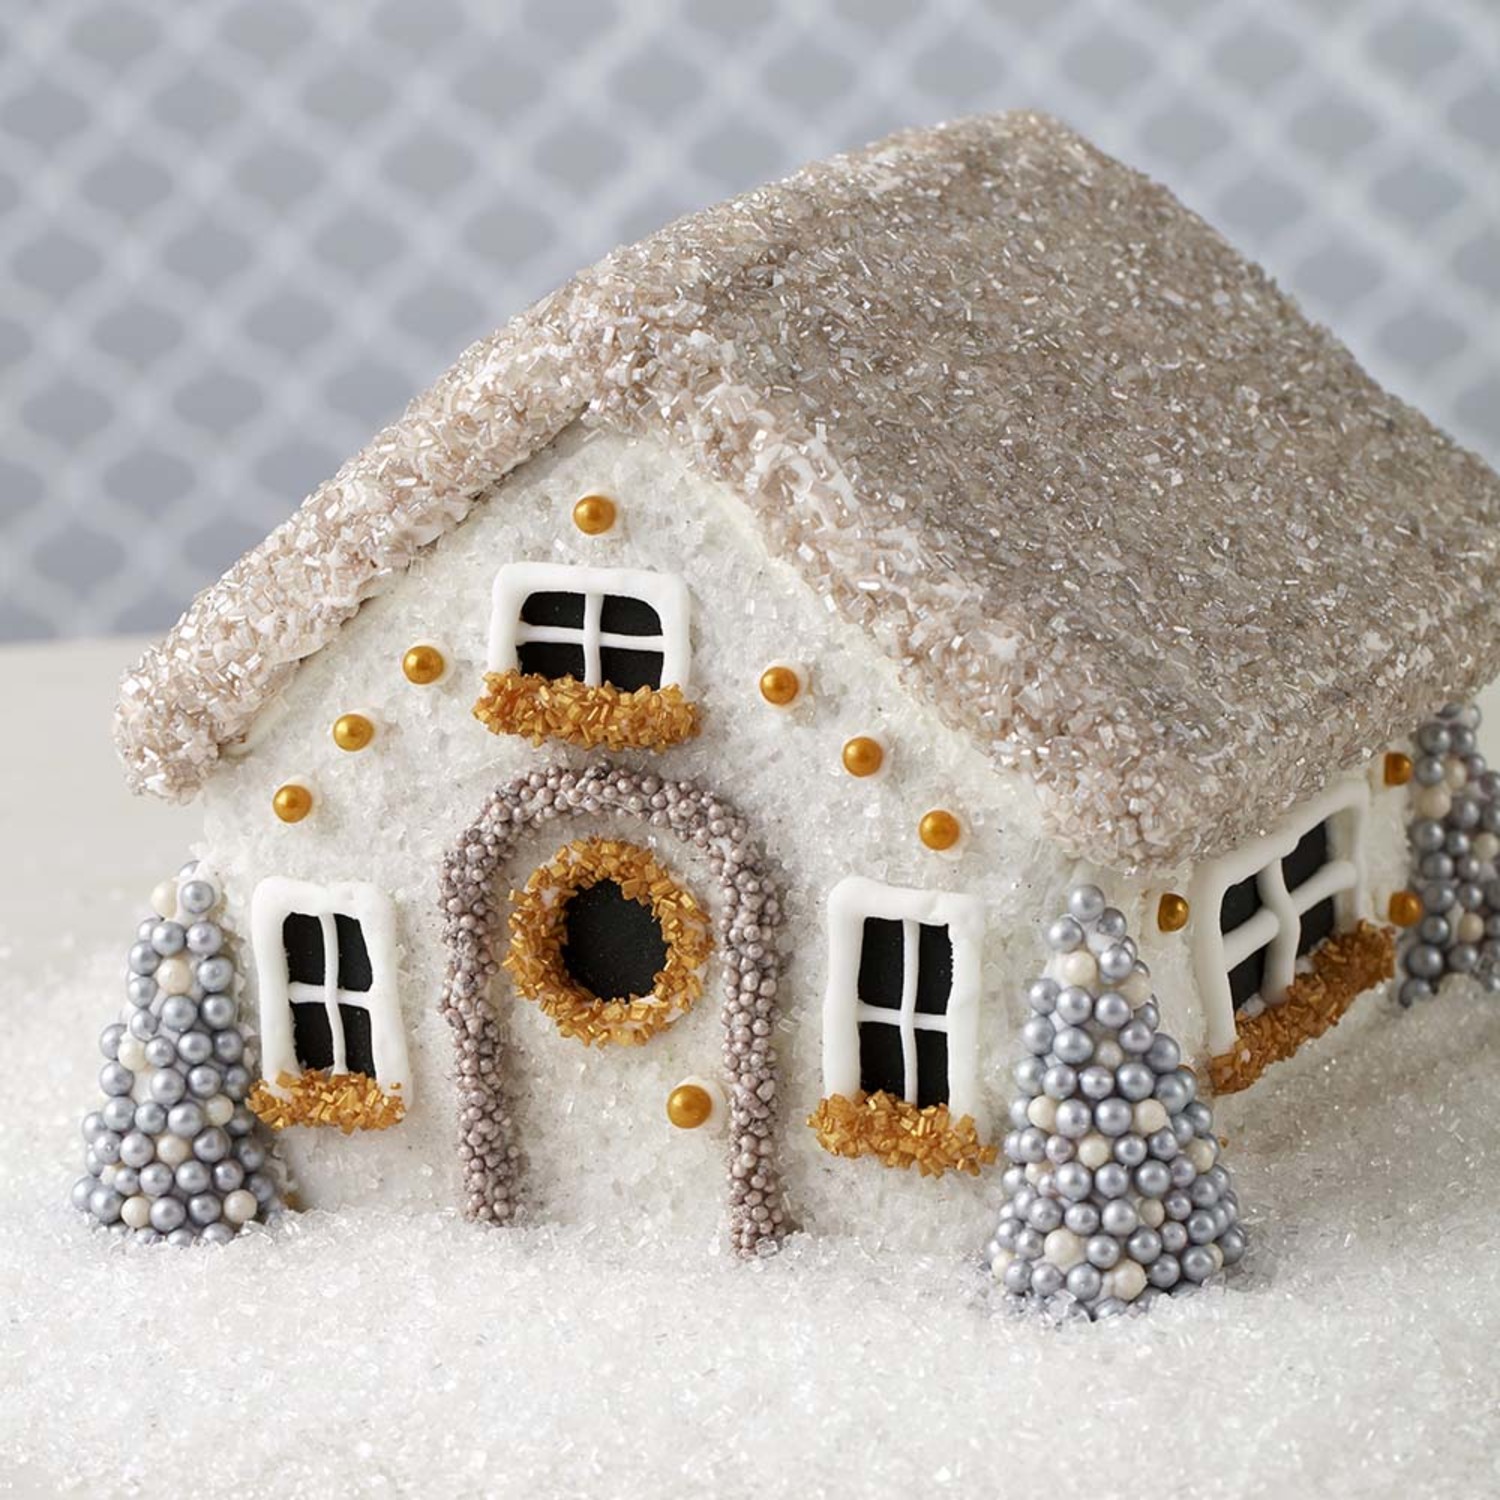 Winter Wonderland Gingerbread House